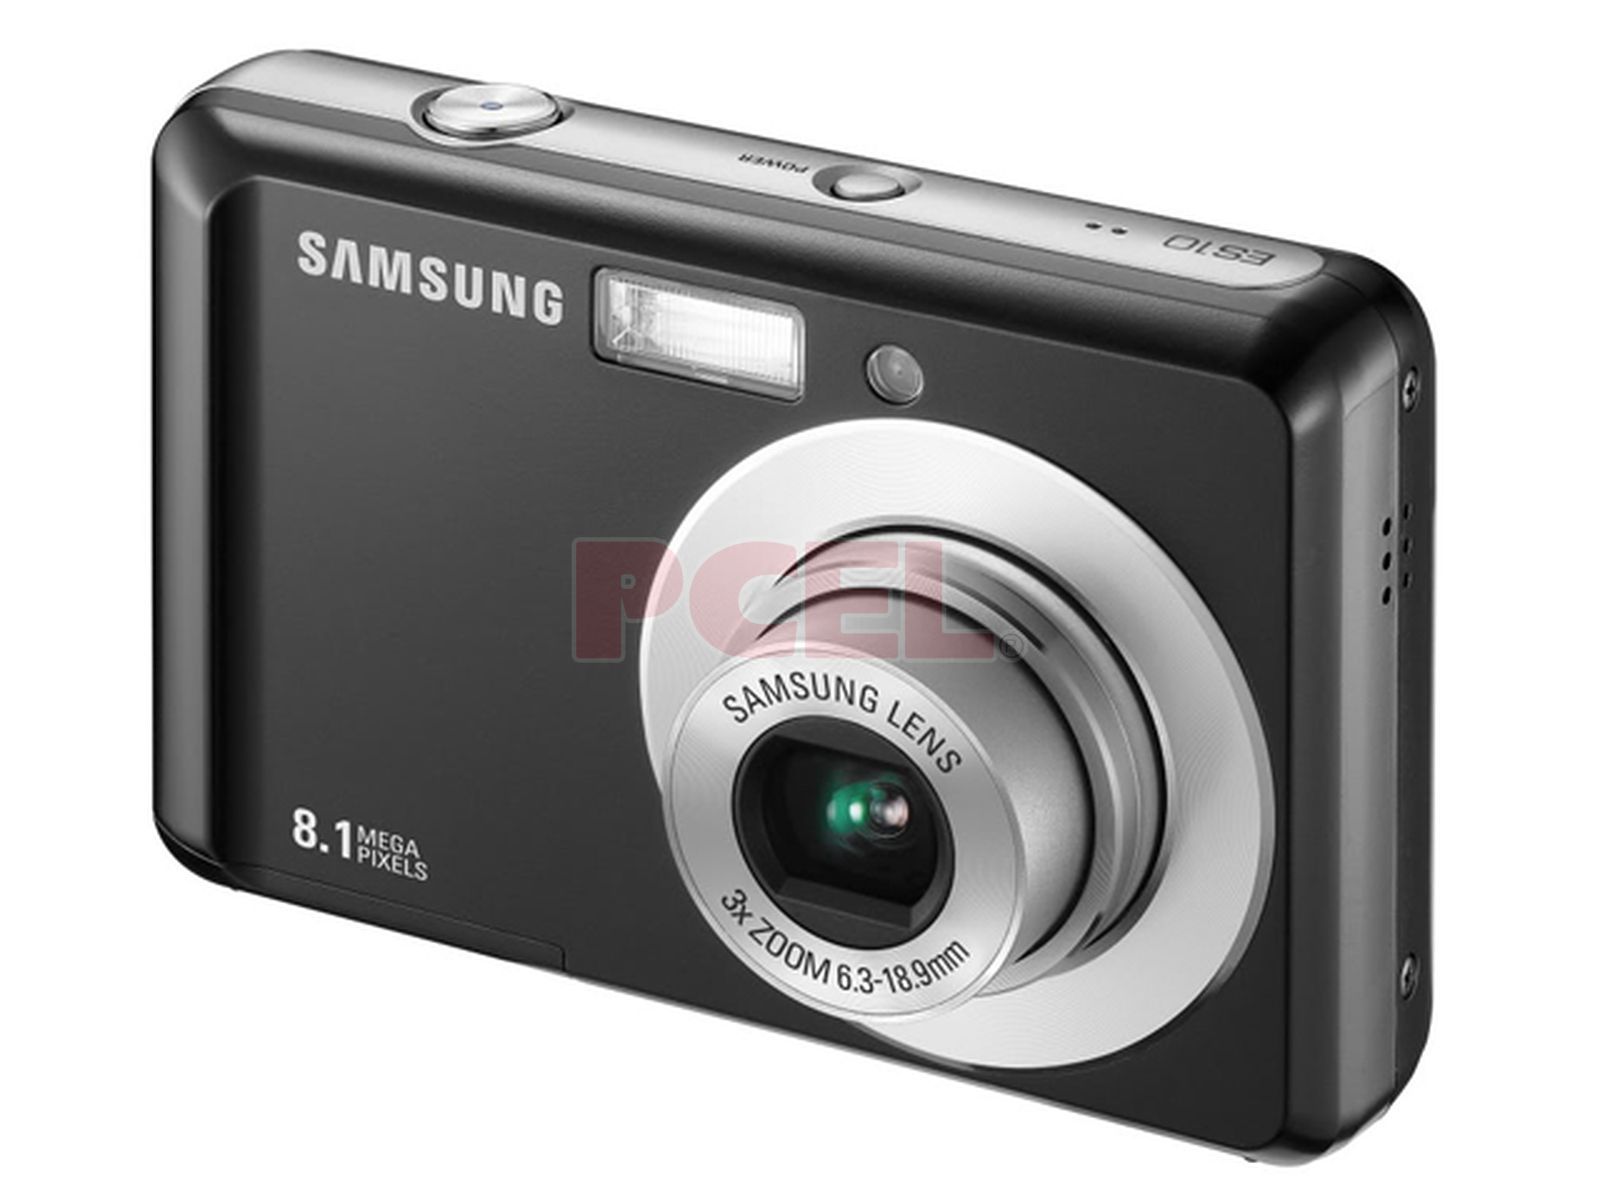 Cámara Fotográfica Digital Samsung ES10, 8.1MP. Color Negra